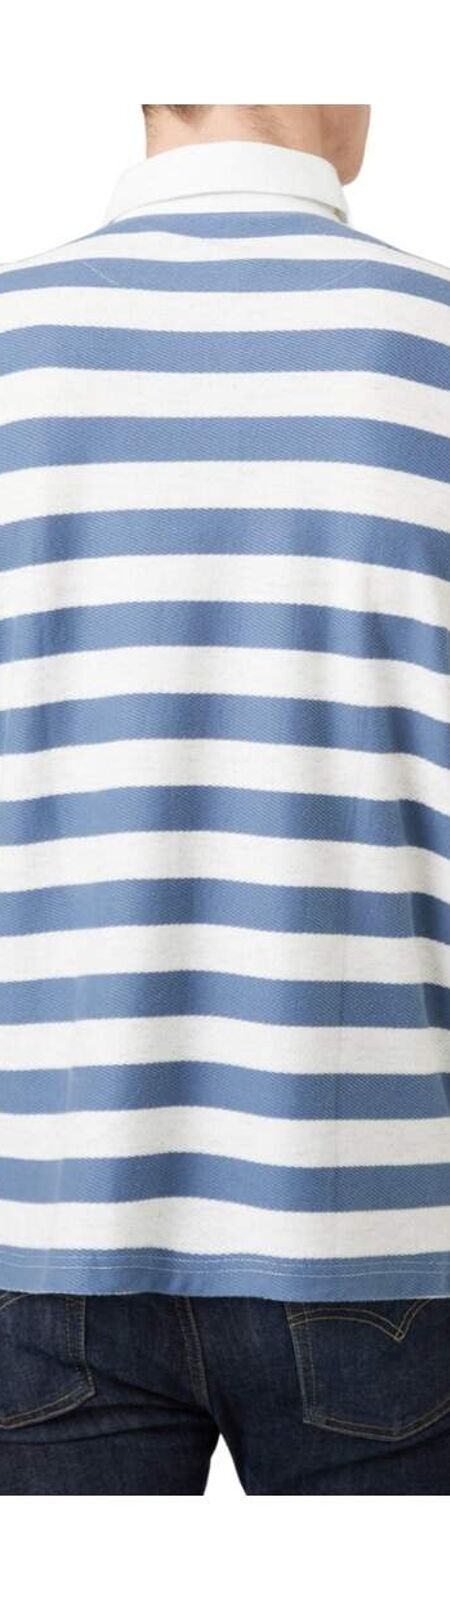 Maine Mens Textured Stripe Short-Sleeved Rugby Top (Navy) - UTDH6520